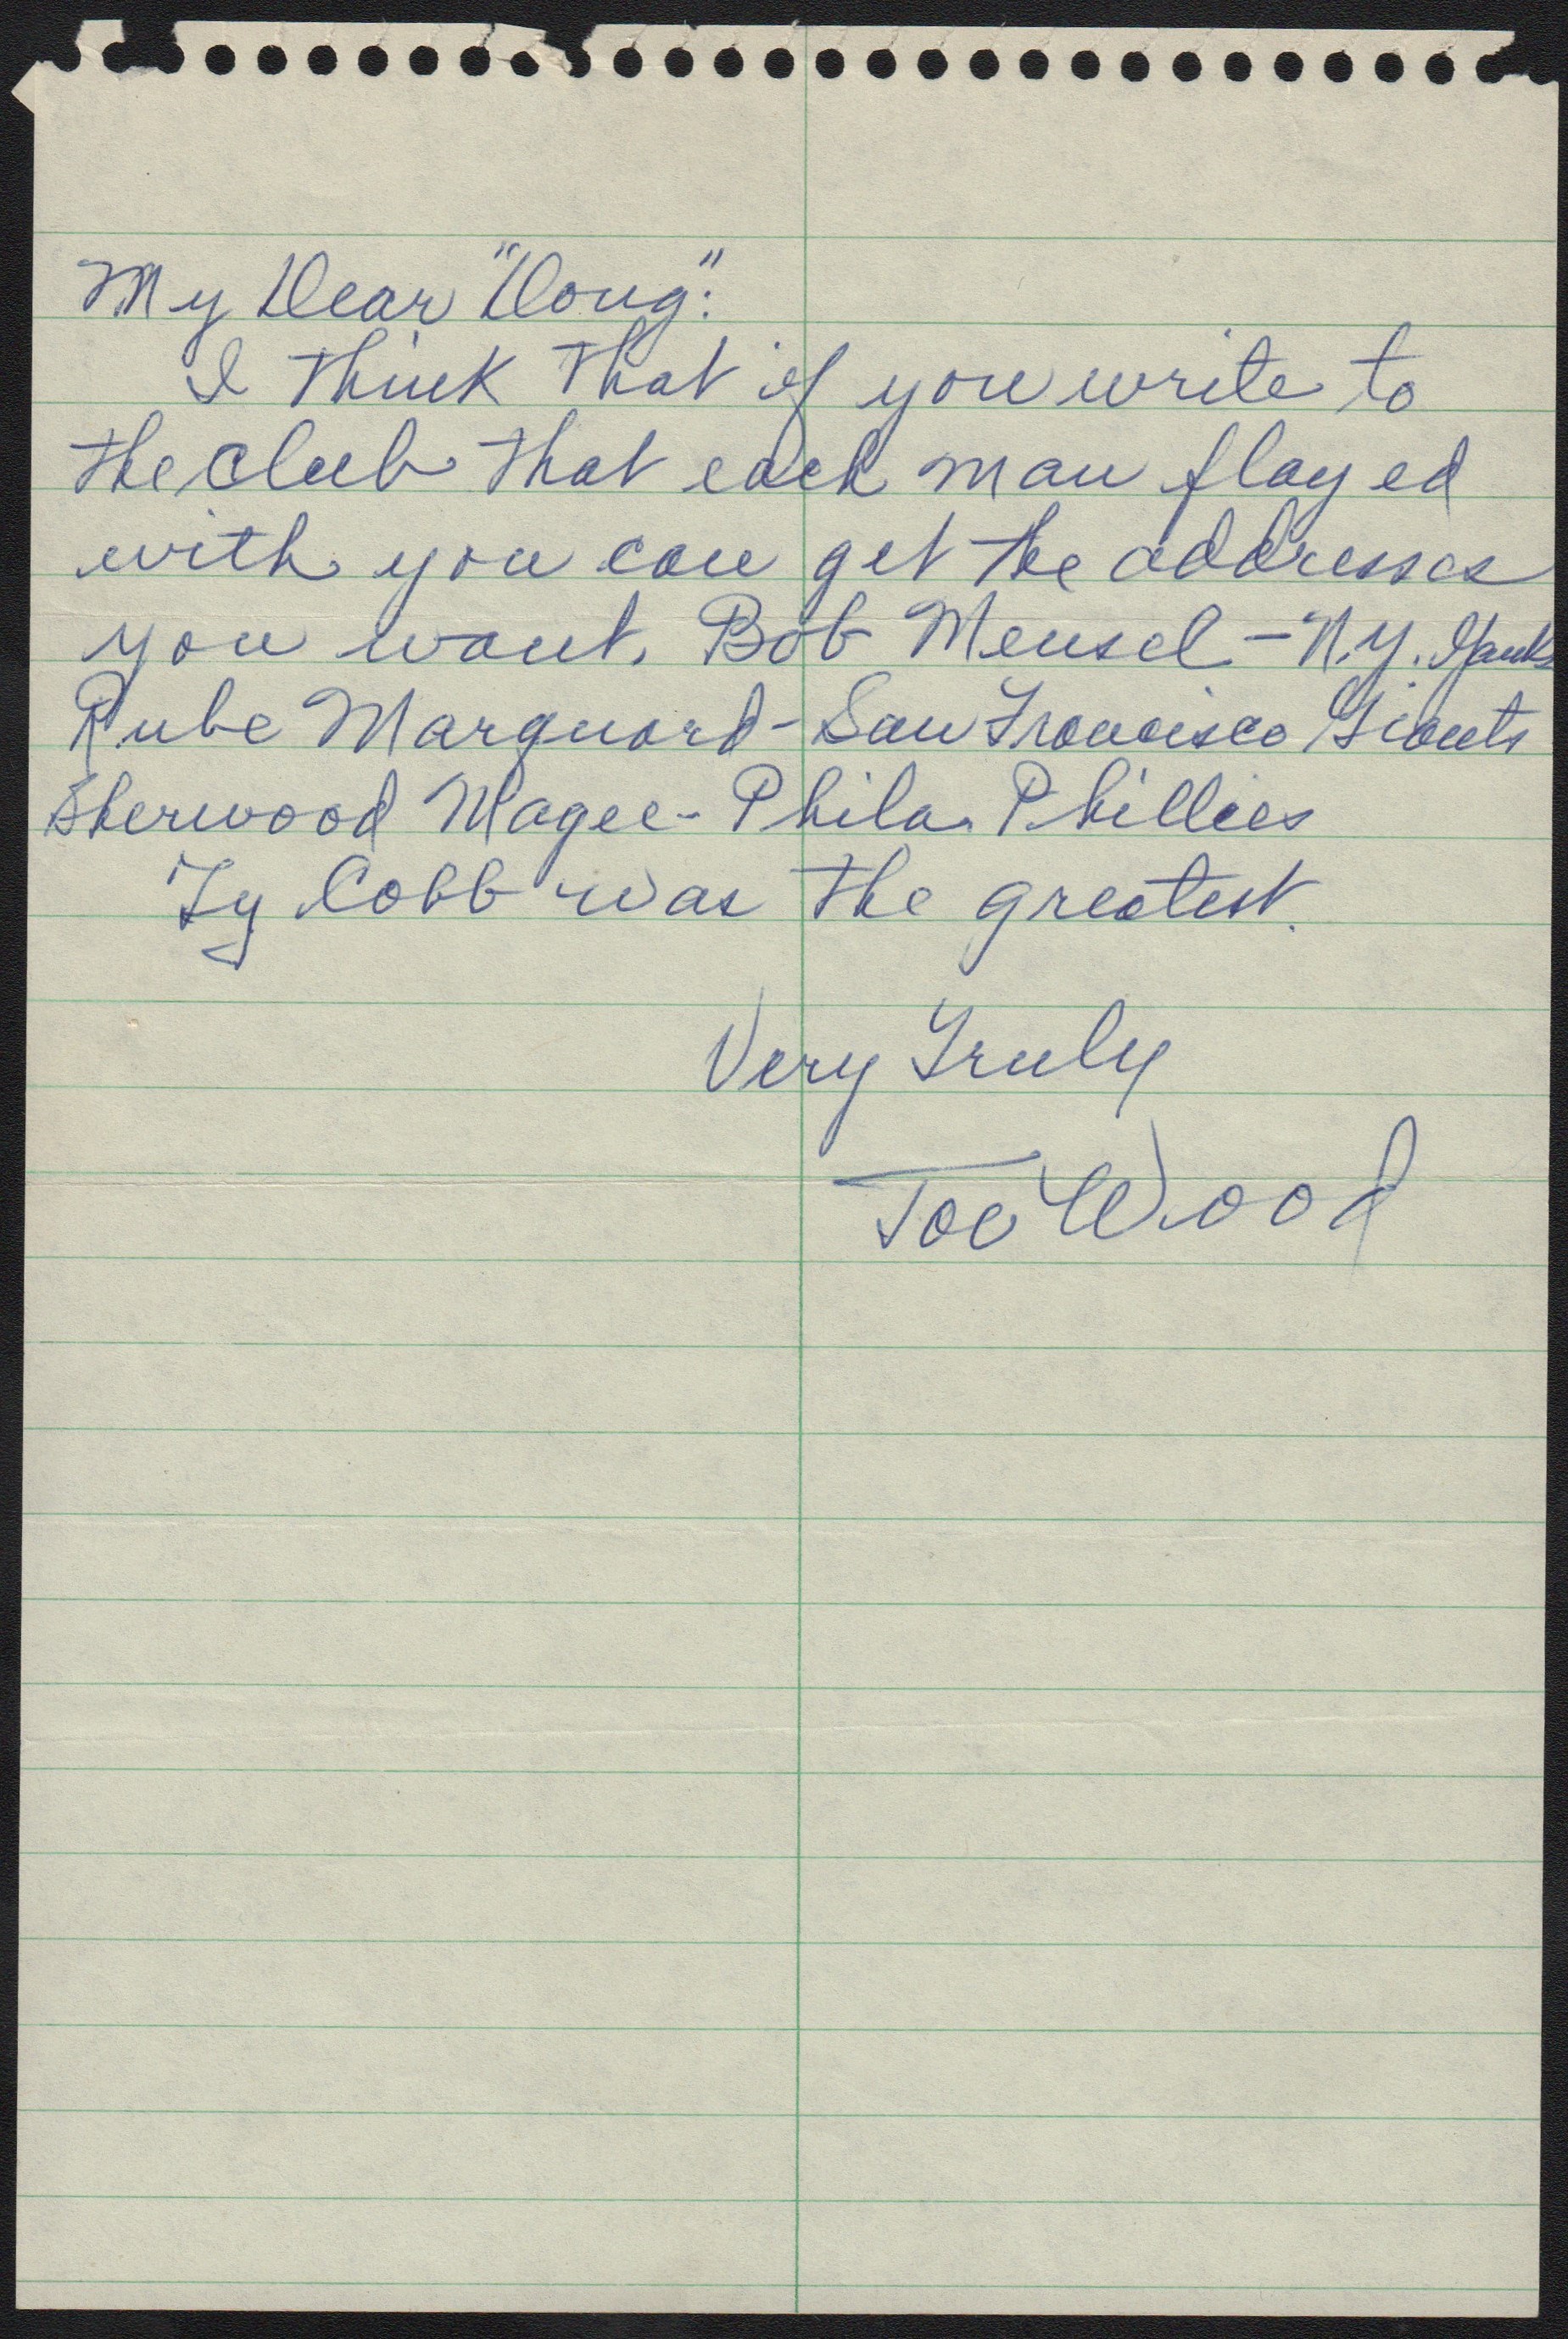 Smokey Joe Wood Hand Written Letter w/ Ty Cobb Content